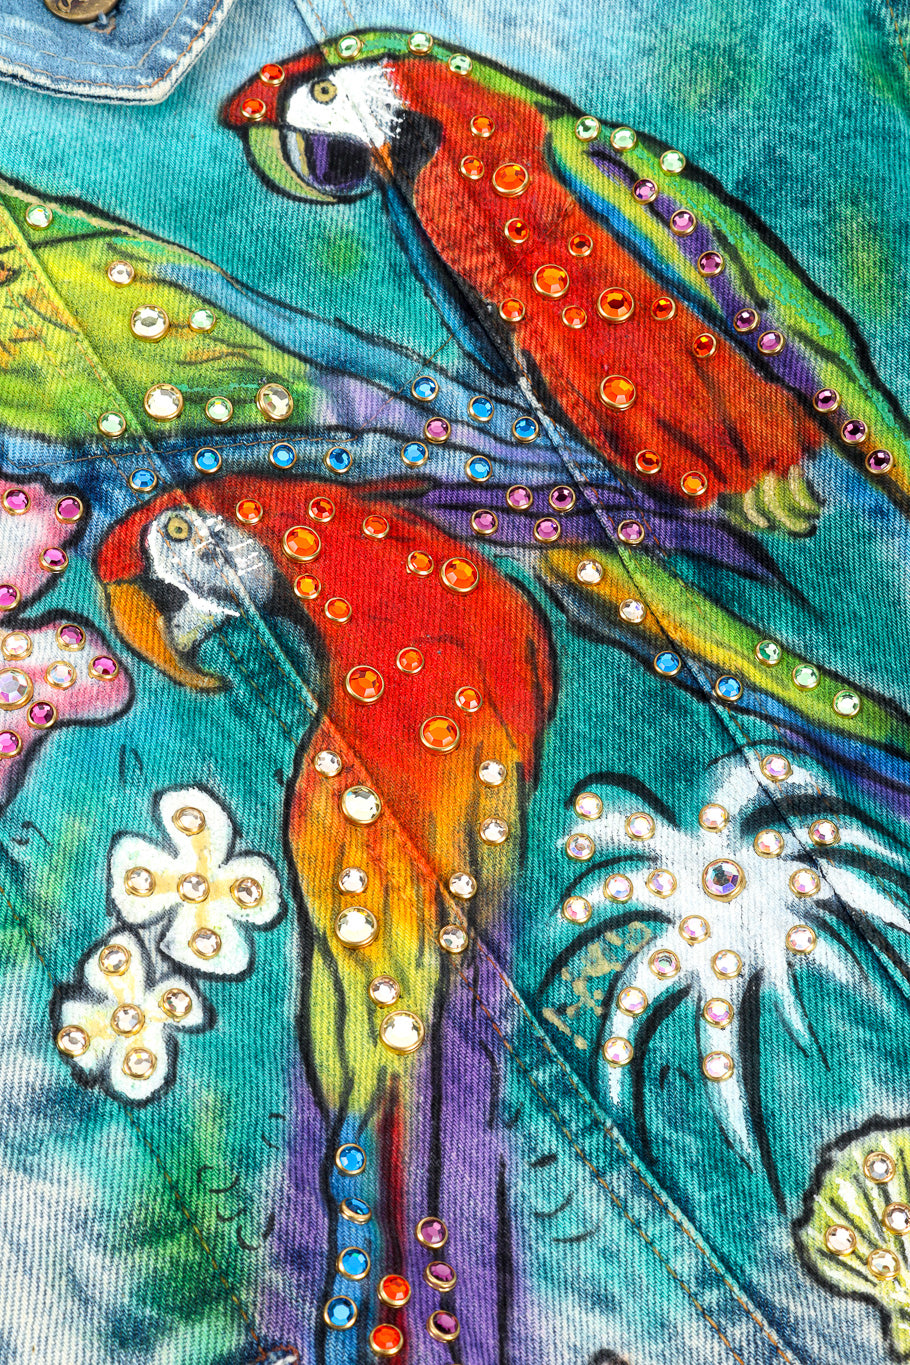 Vintage Tony Alamo Florida Denim Jacket parrot illustration closeup @Recessla